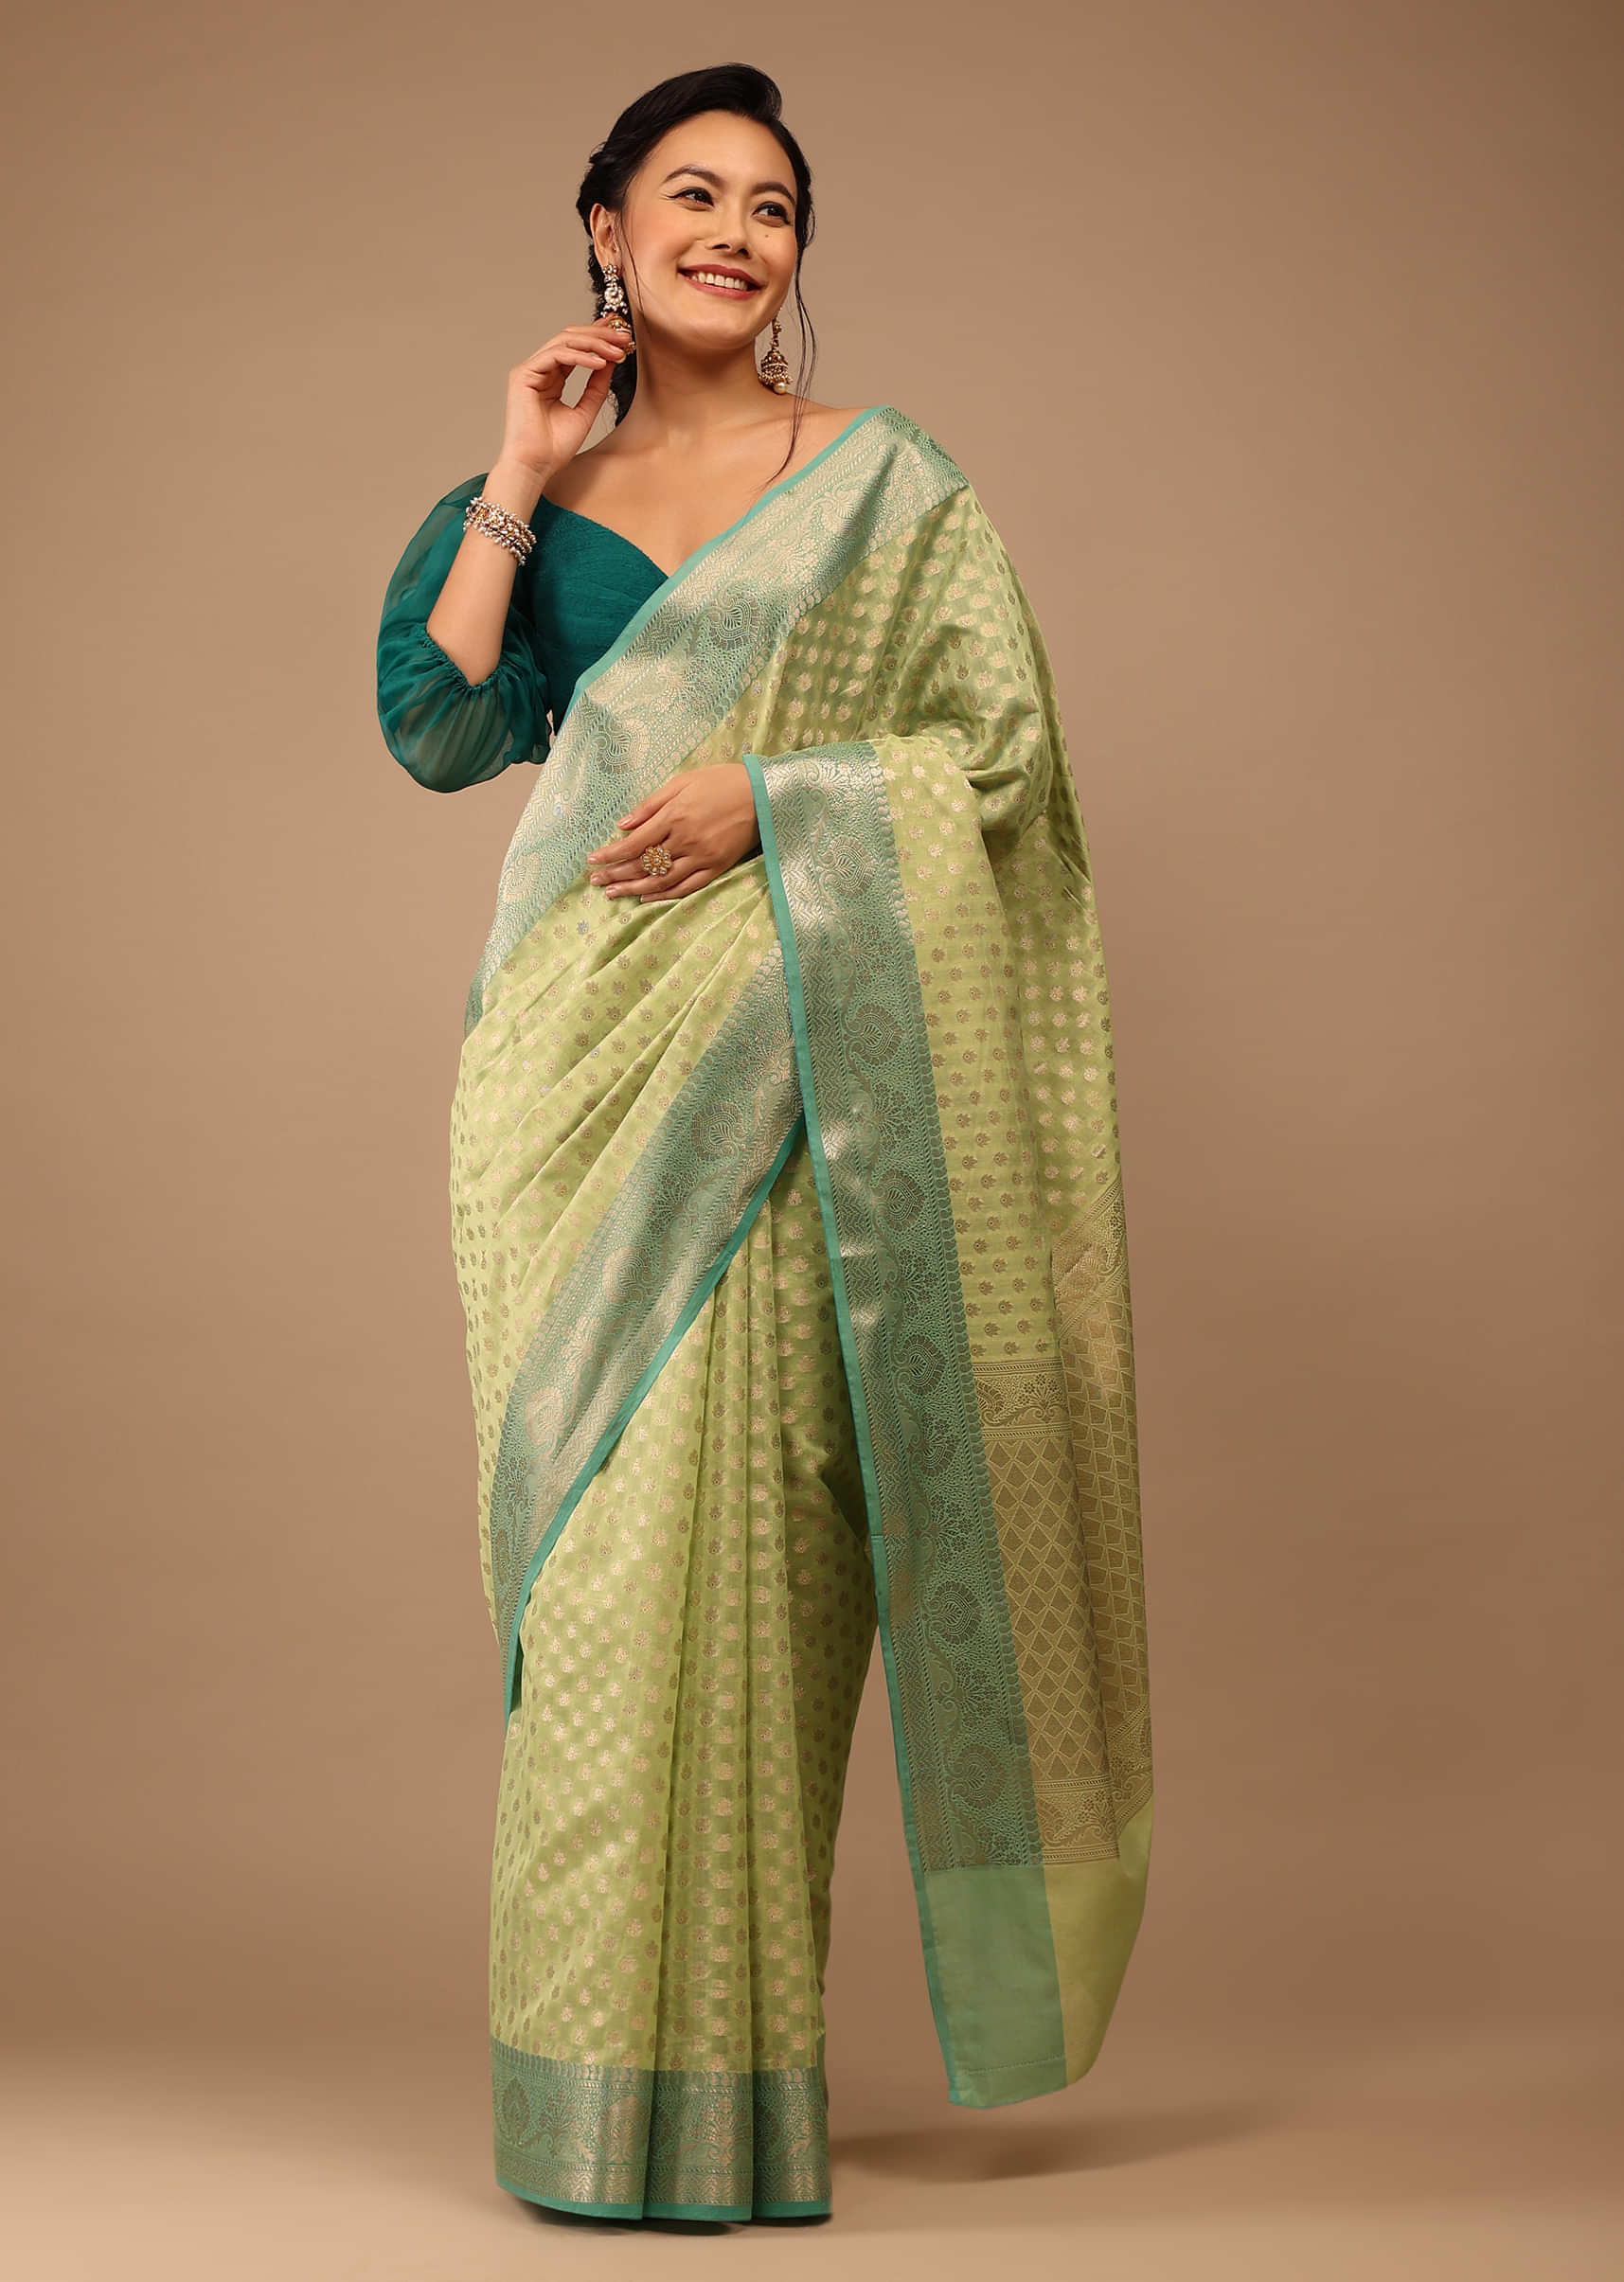 Sap Green Saree In Banarsi Chanderi And Pure Handloom Cotton